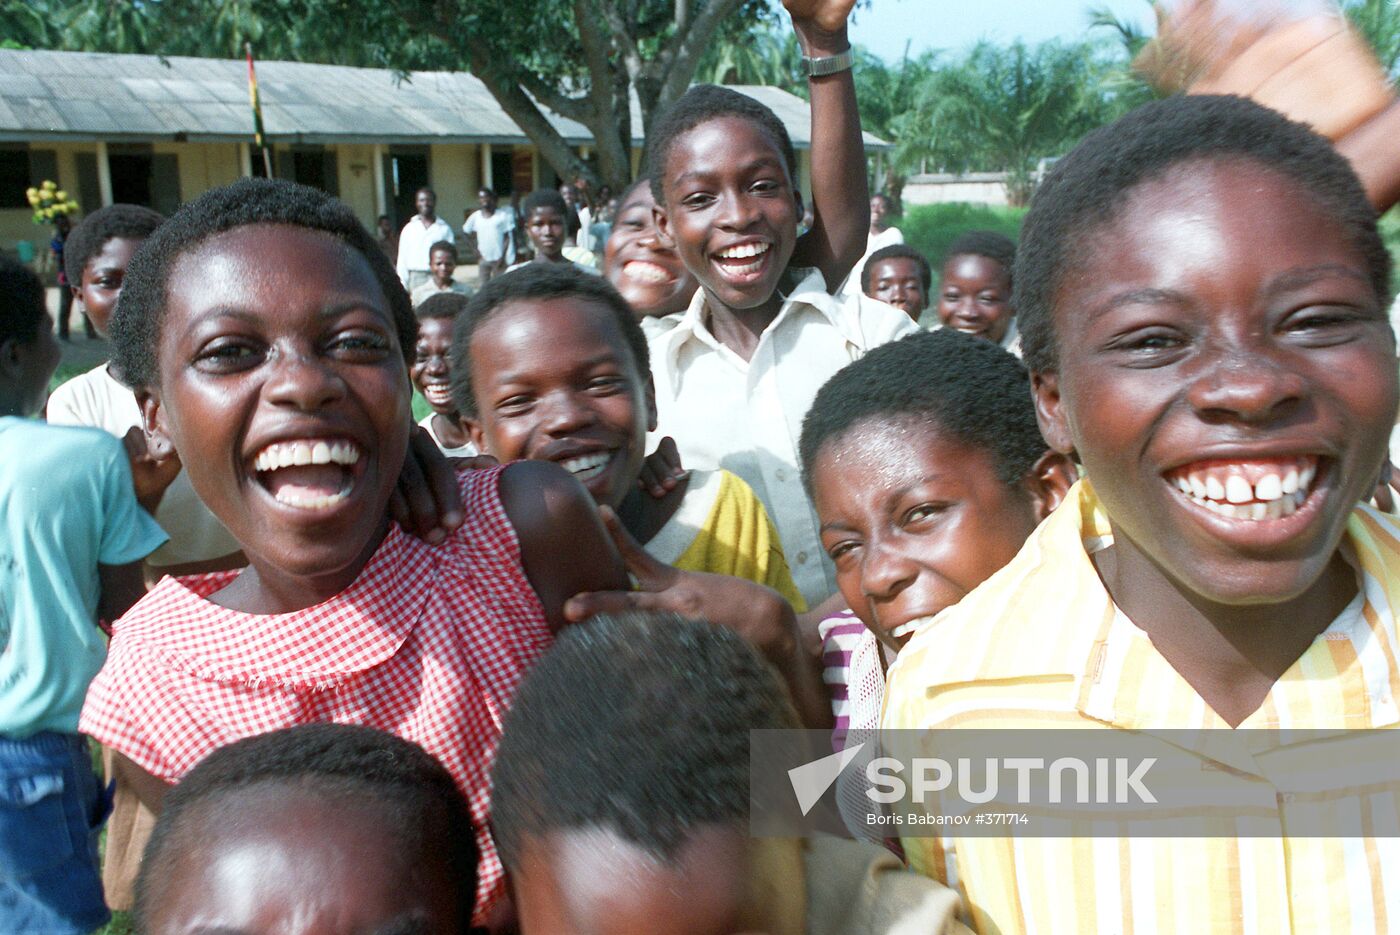 School children from Ghana